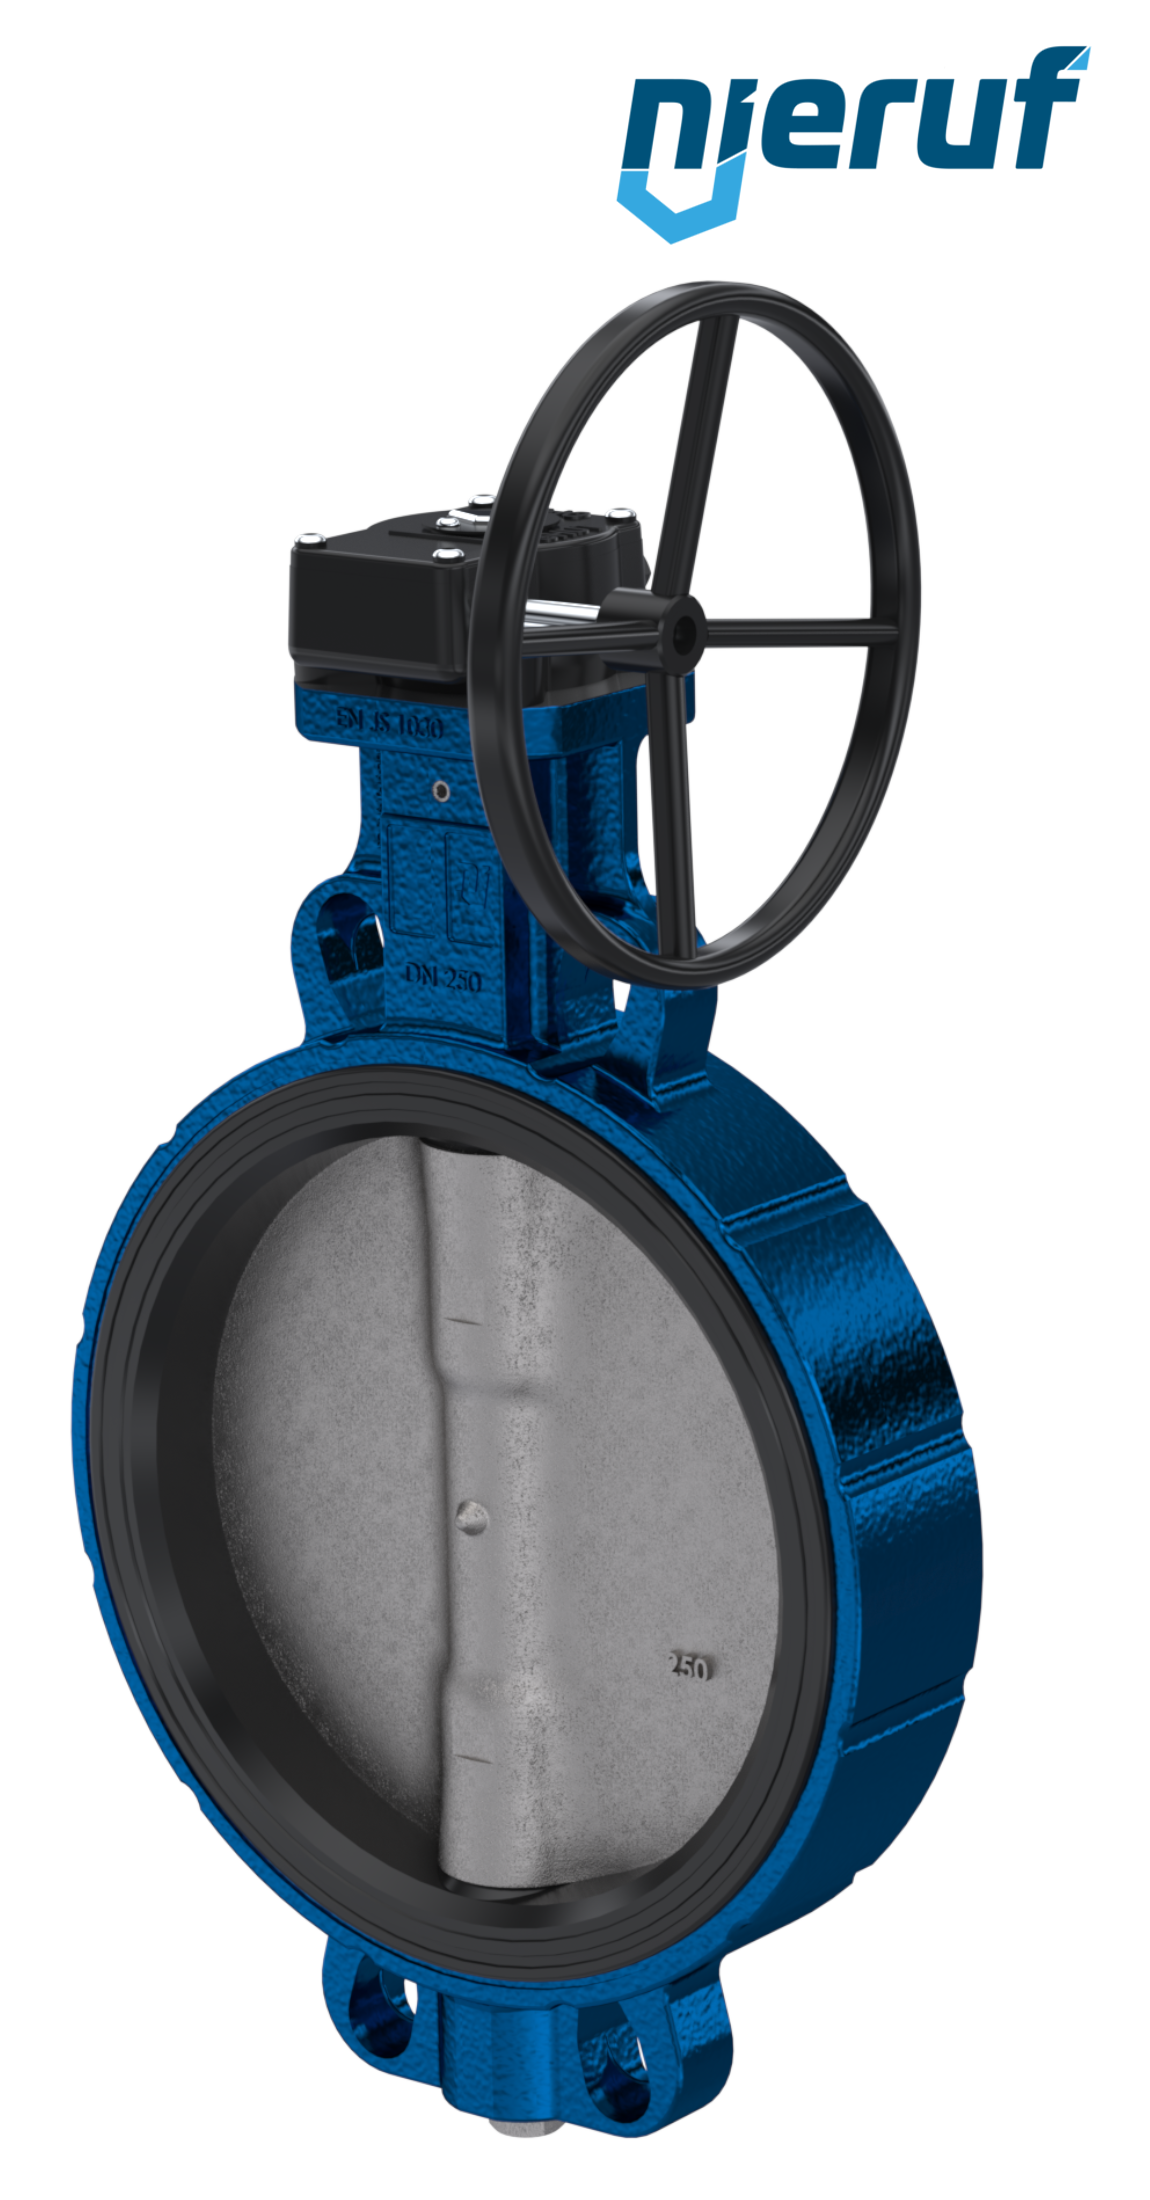 Butterfly valve AK01 DN 200 PN6-PN10-PN16 & ANSI150 DVGW-water Worm gear